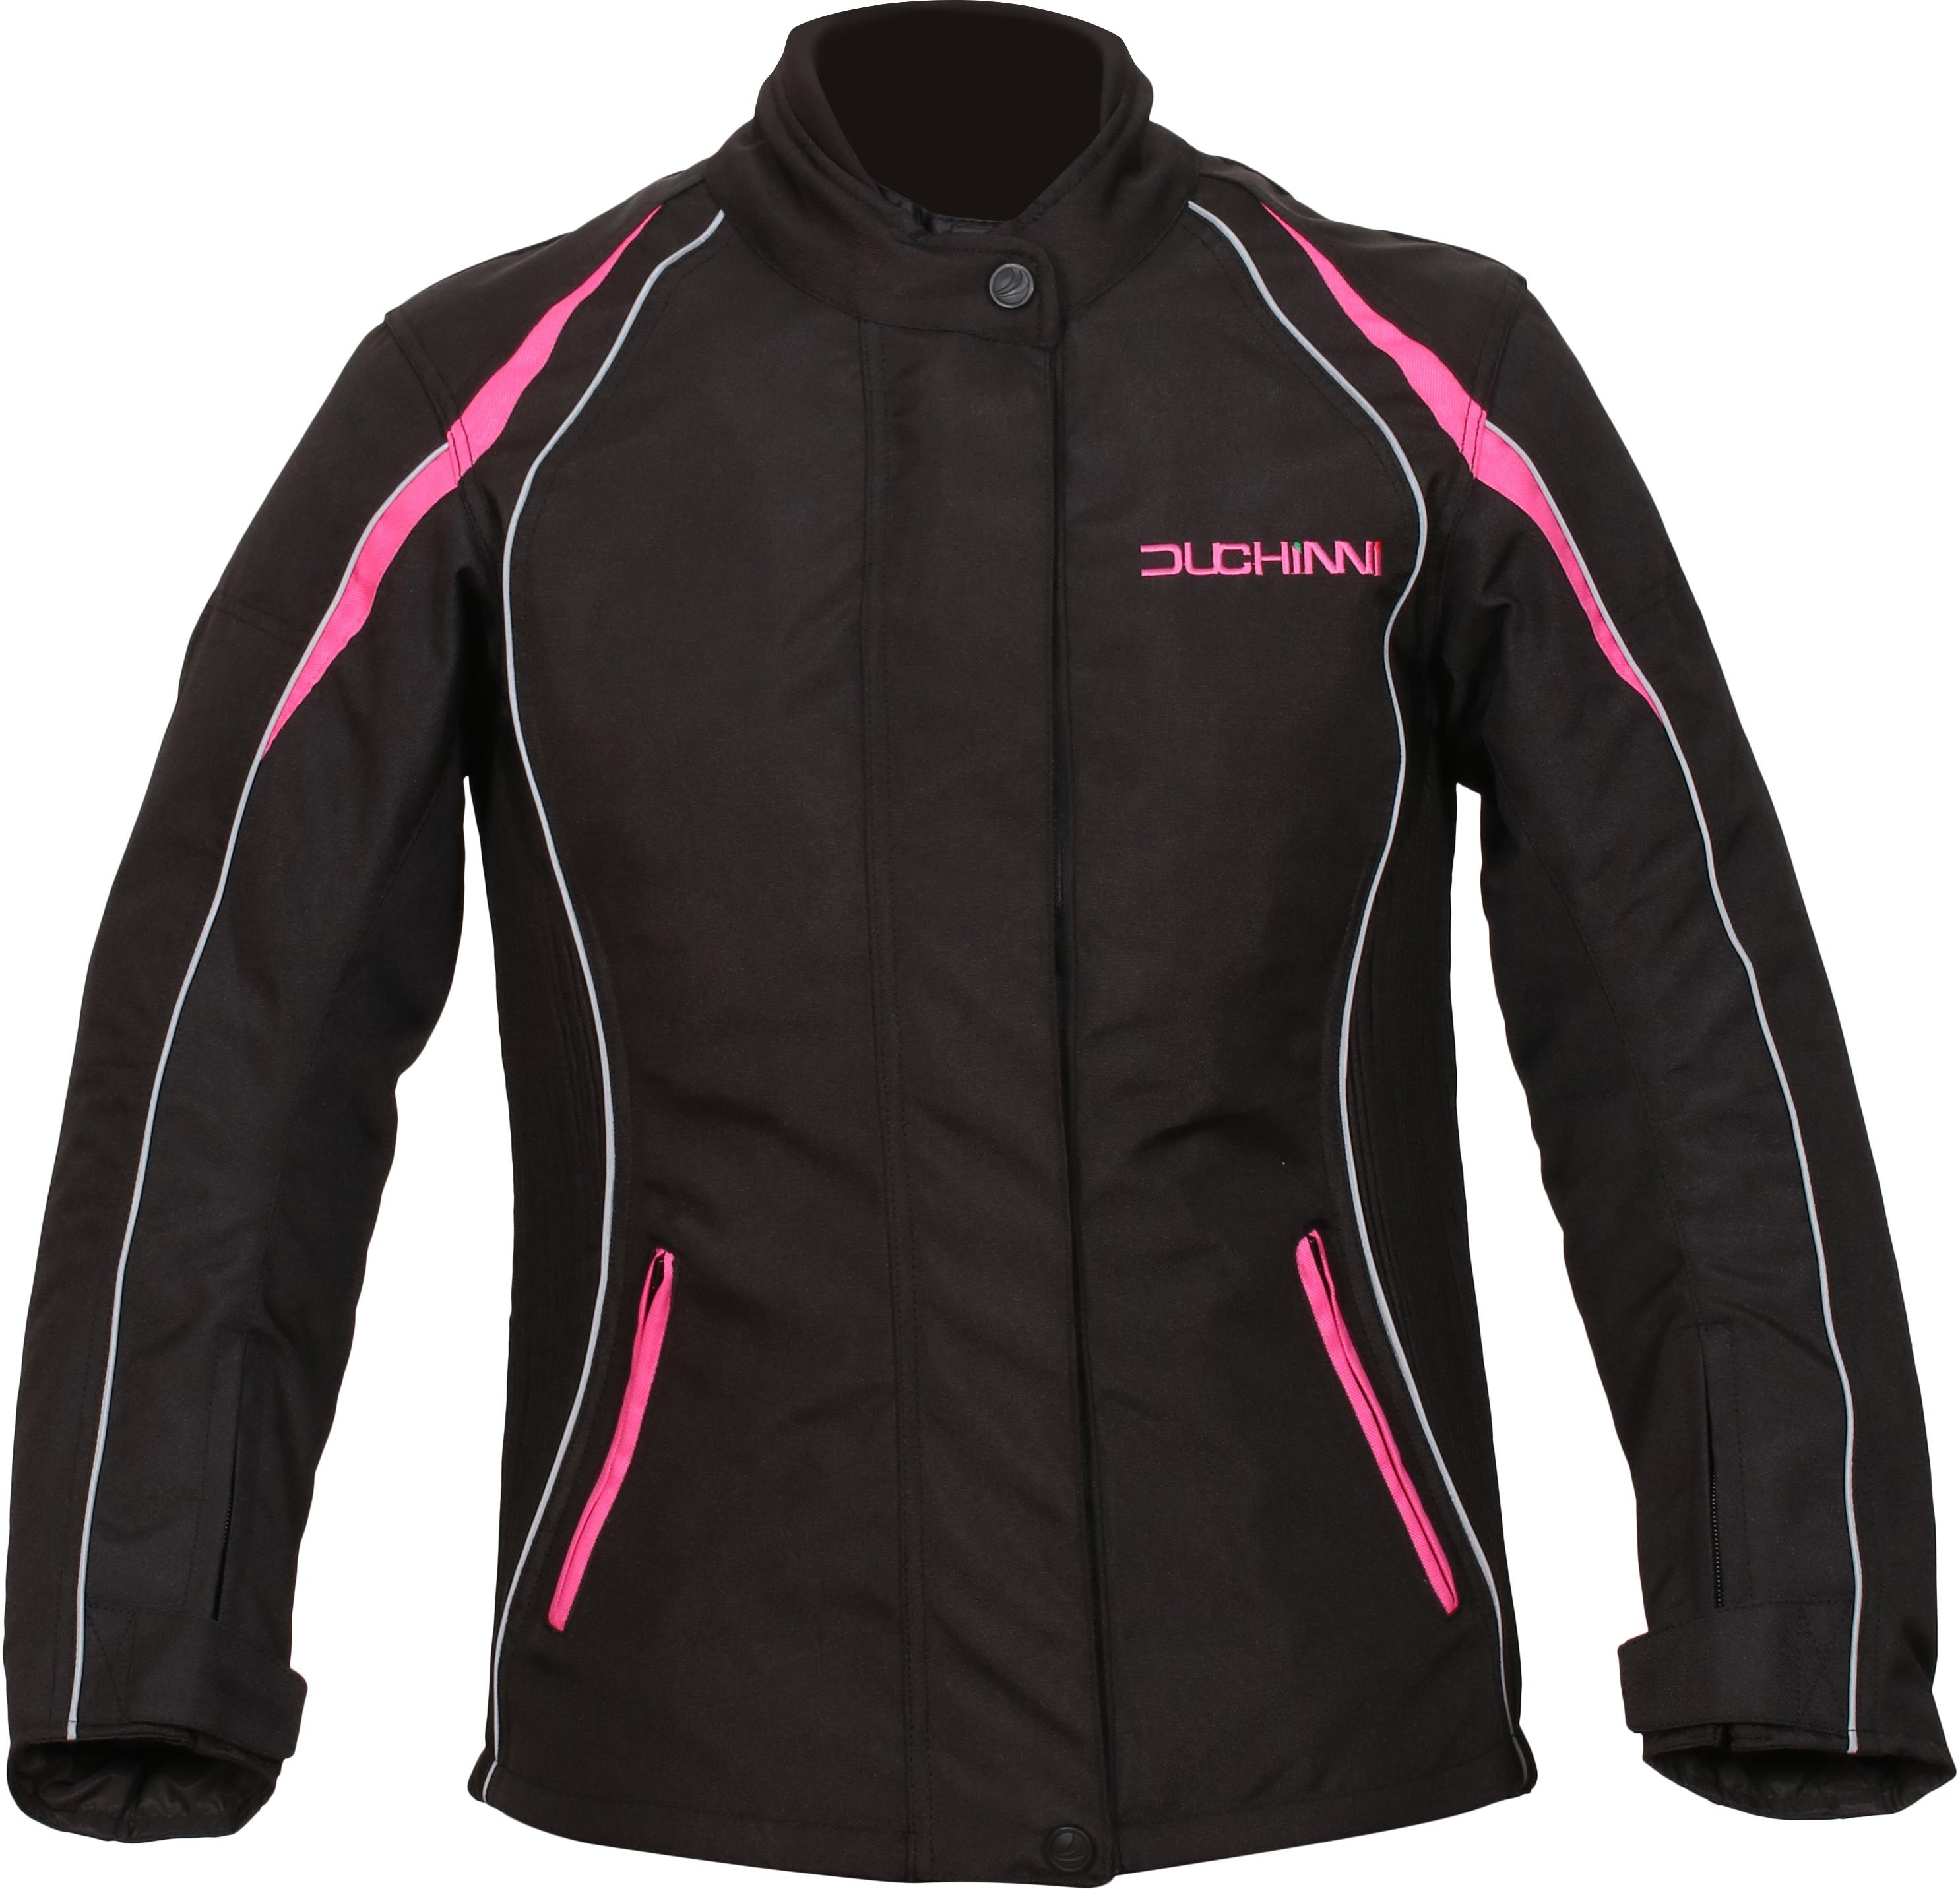 Duchinni Vienna Ladies Motorcycle Jacket - Black And Pink, 8